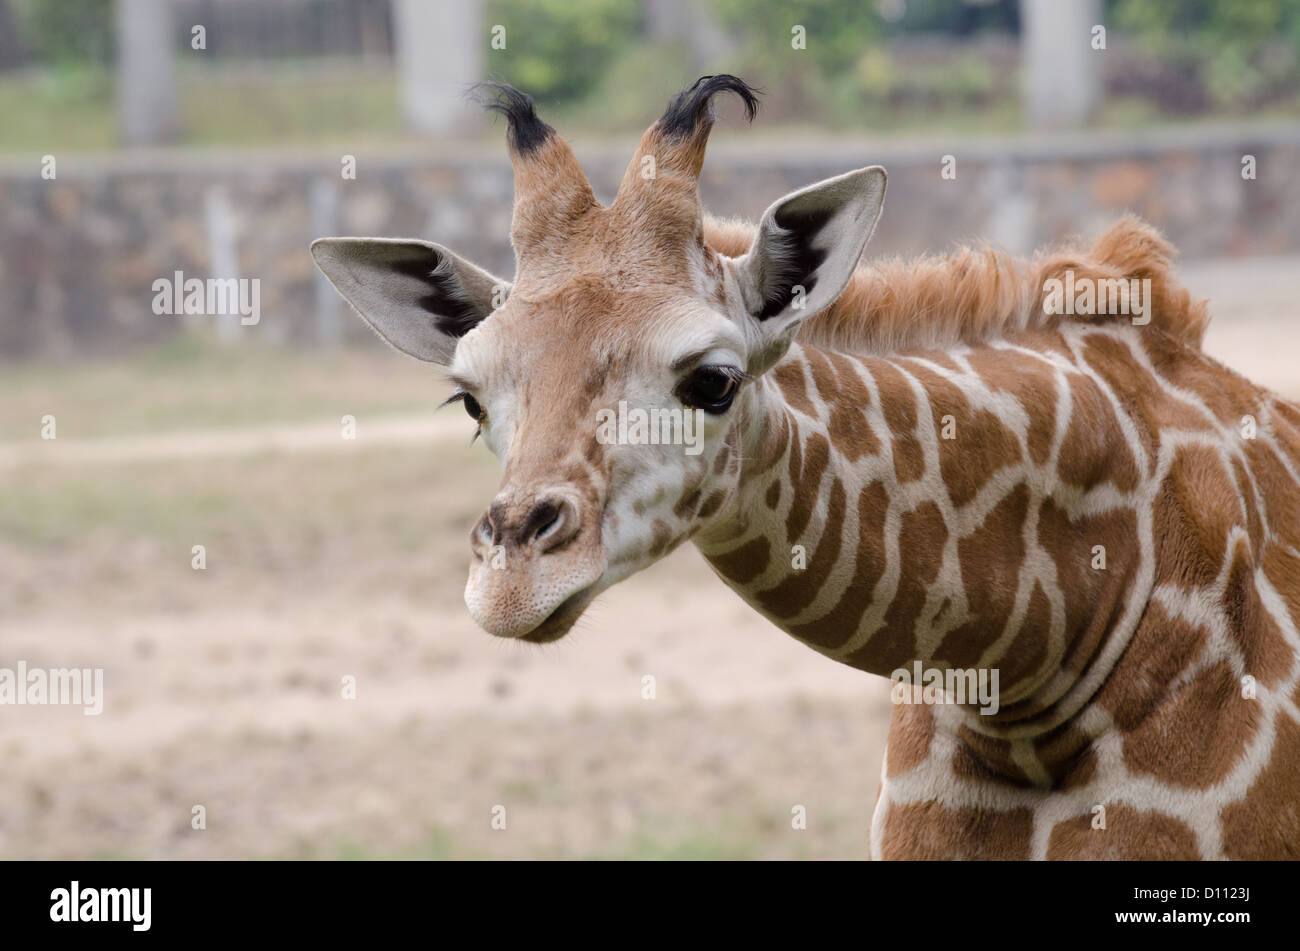 wild animal giraffe close up Stock Photo